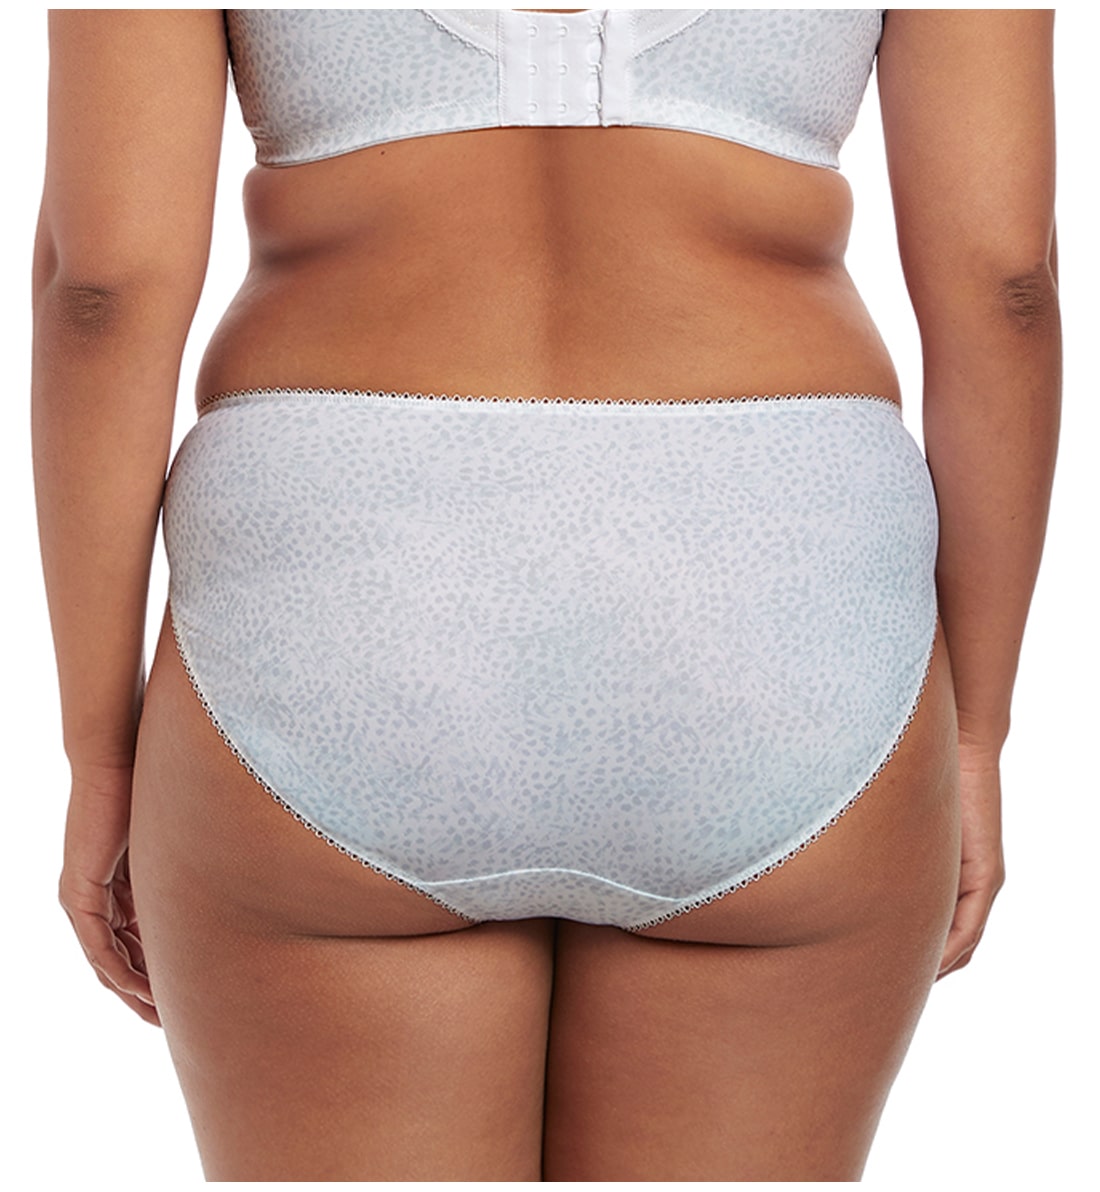 Elomi Morgan Stretch Lace Matching Panty Brief (4115),Medium,White - White,Medium